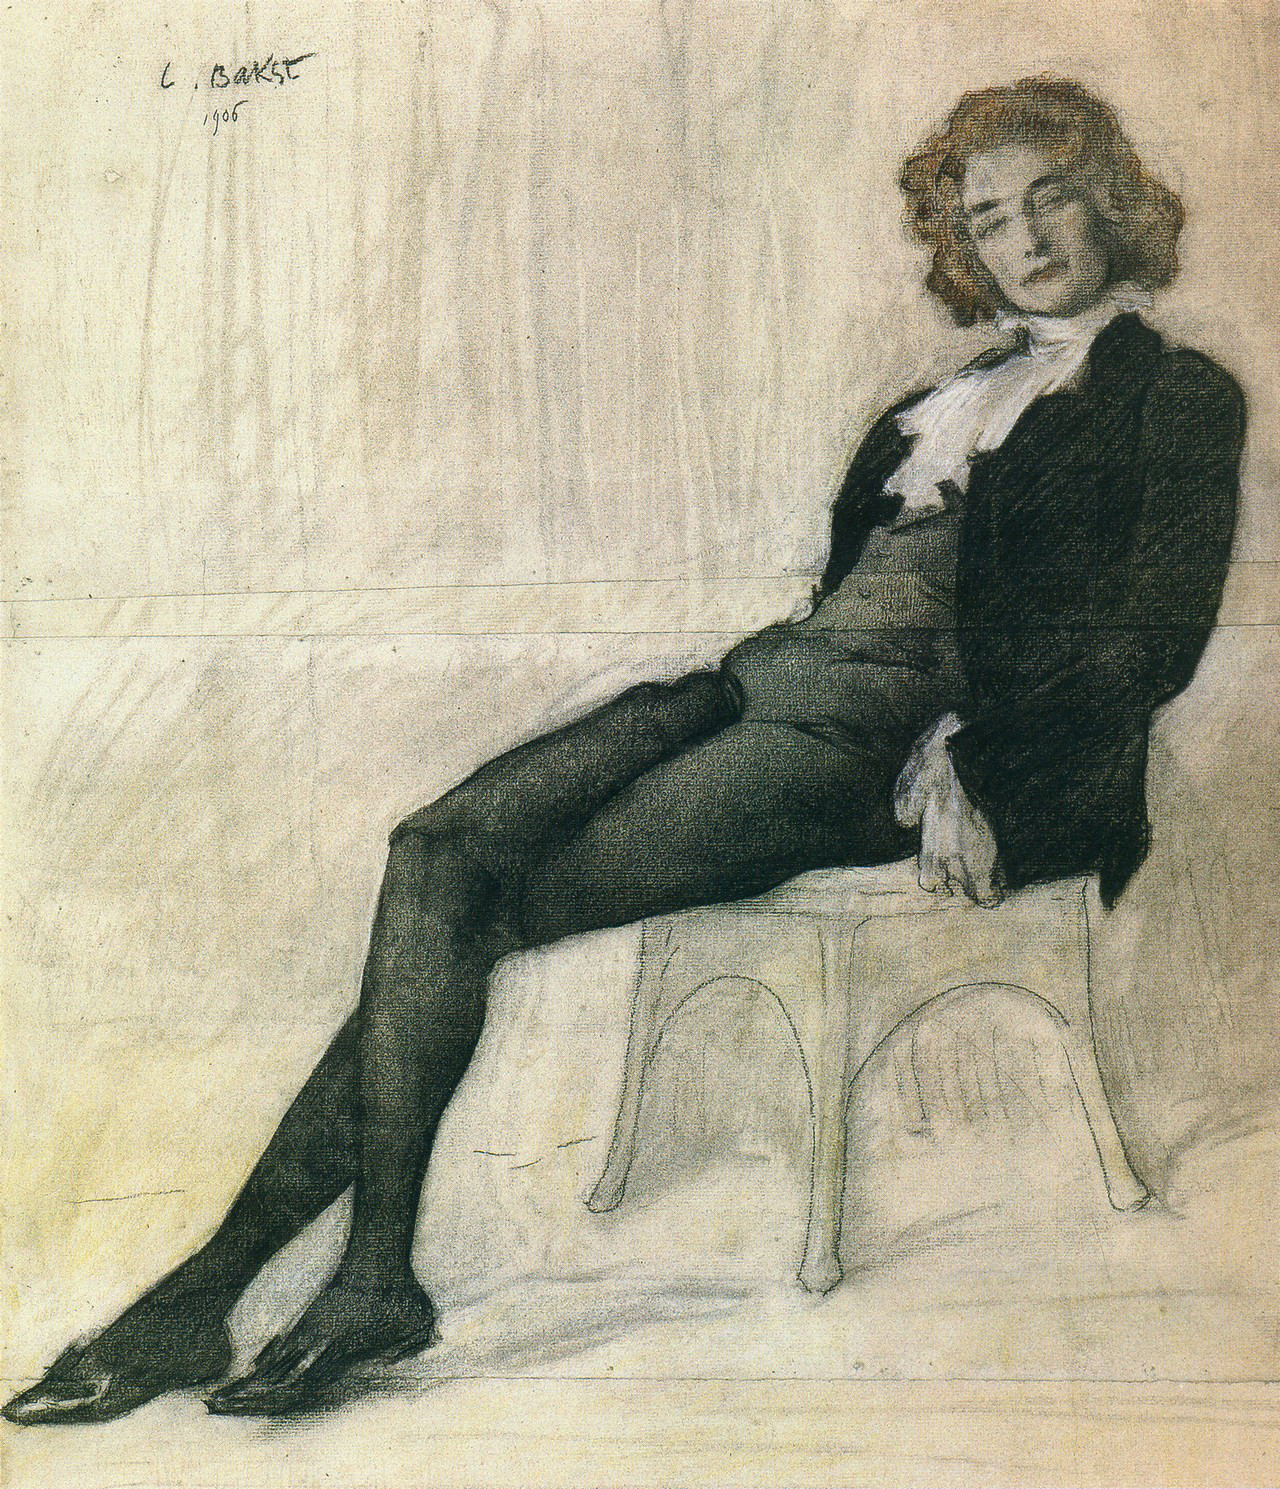 Portrait of Gippius by Leon Bakst, 1906